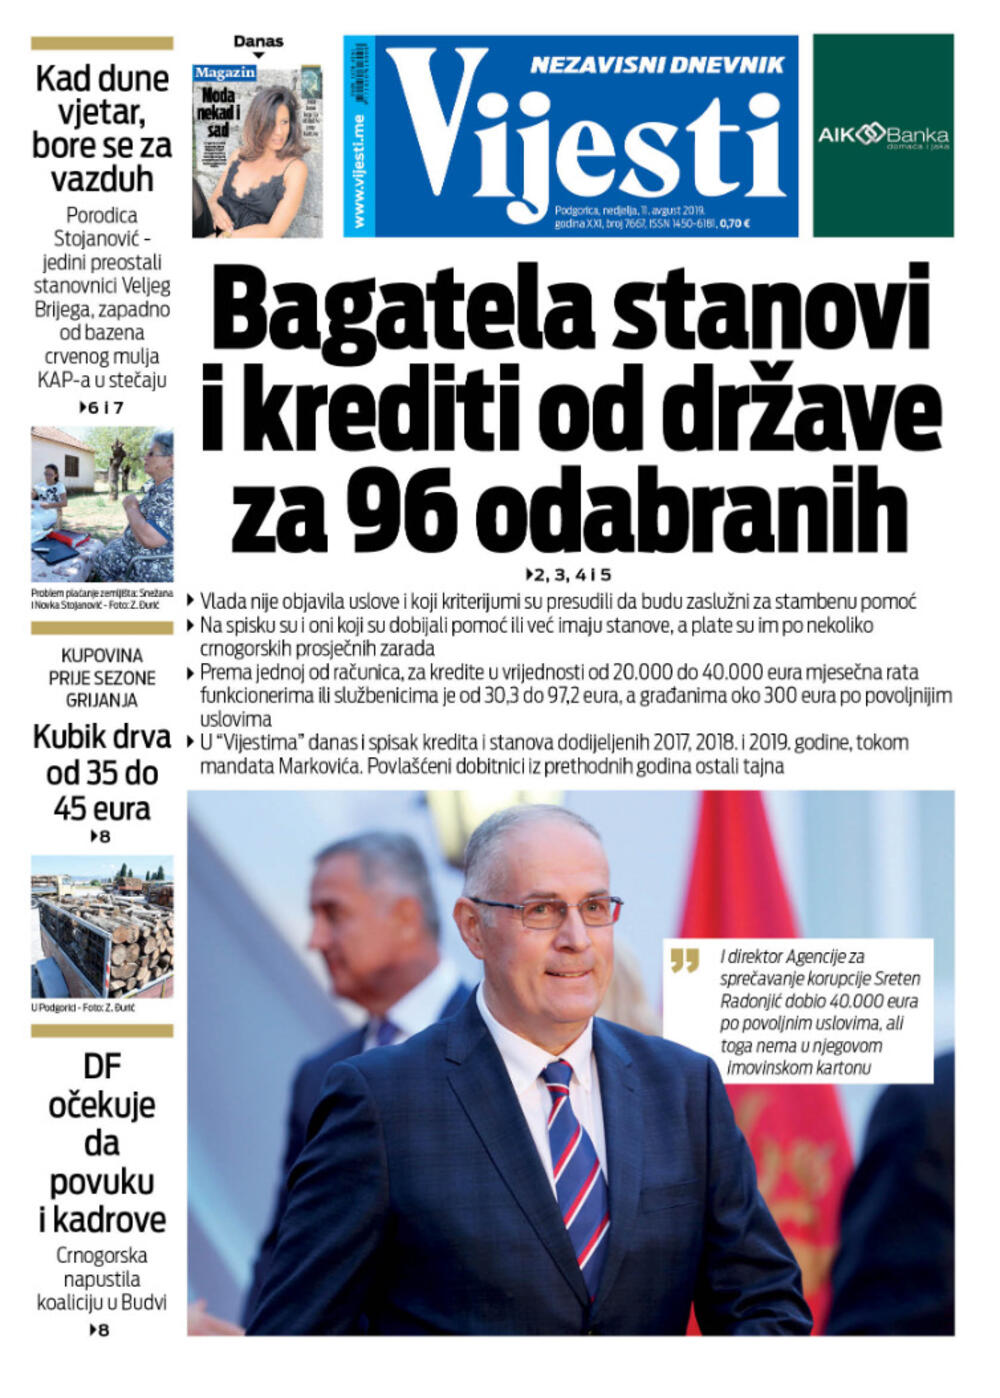 Naslovna strana "Vijesti" za 11. avgust